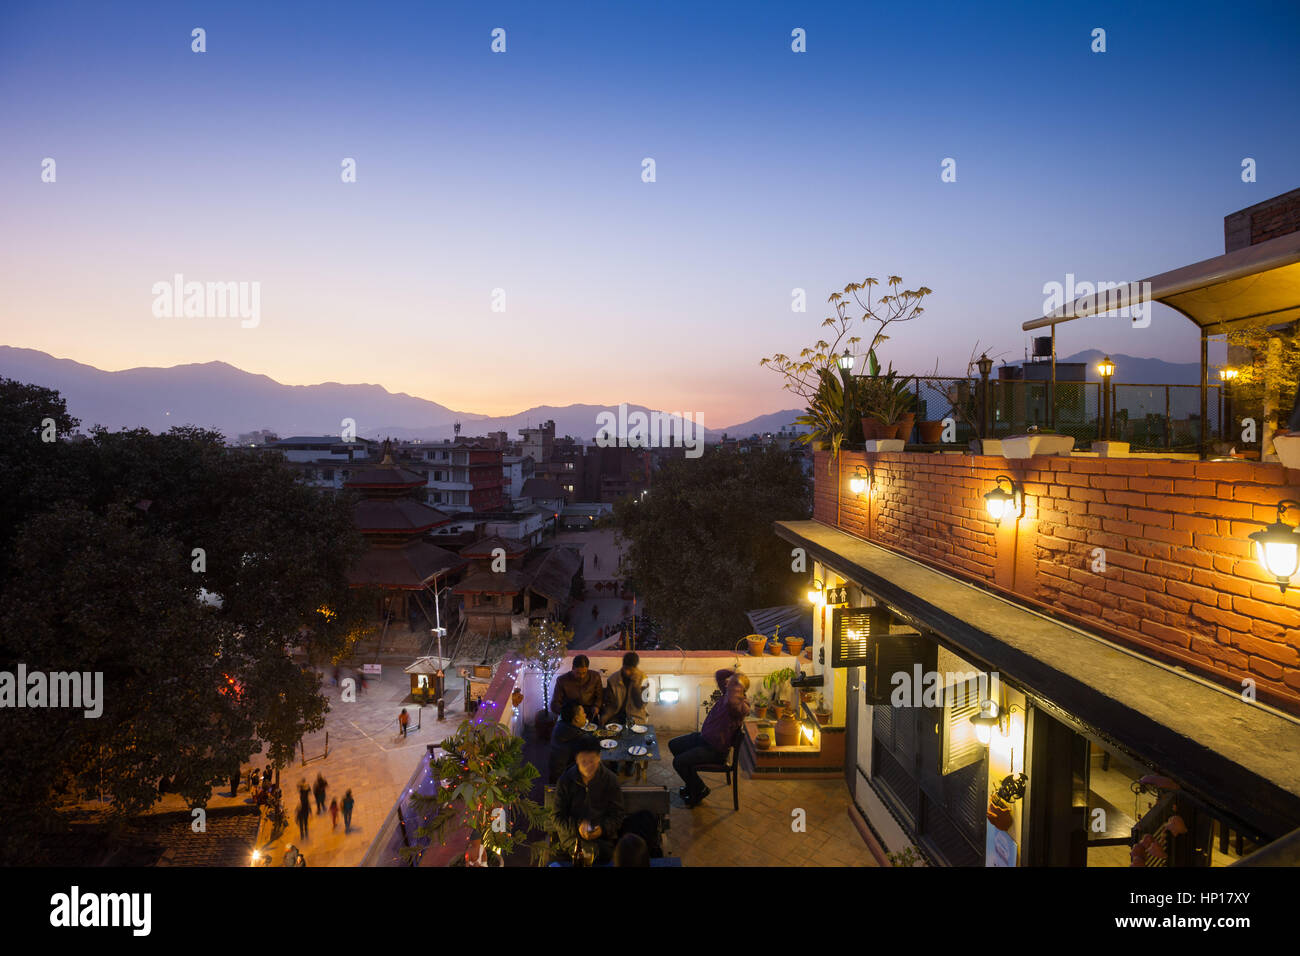 KATHMANDU, NEPAL - 16 December 2016: Restaurant and view over Taleju Temple at Durbar Square, 16 December 2016 in Kathmandu, Nepal Stock Photo